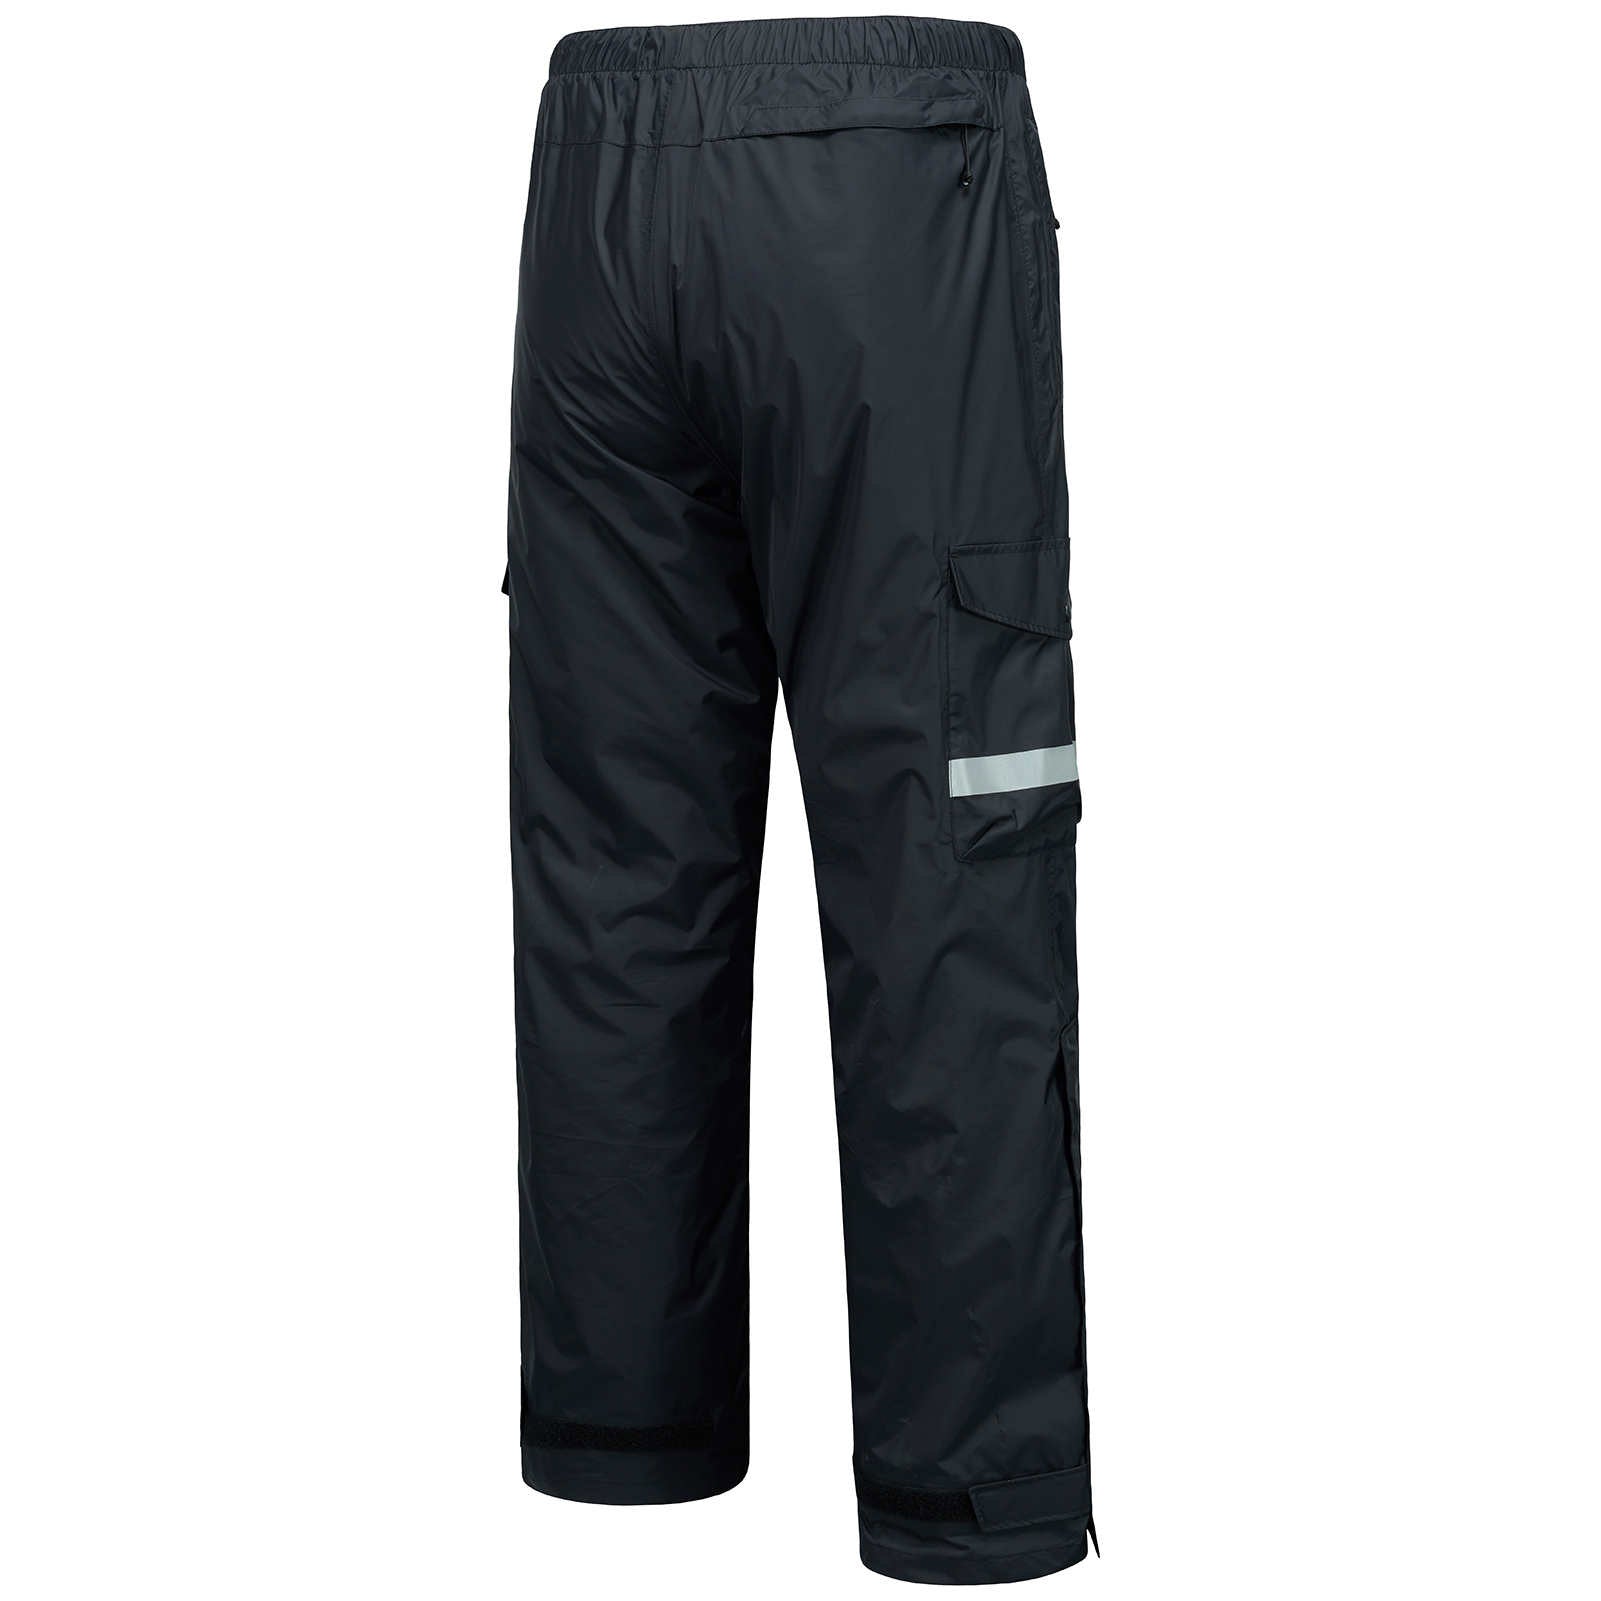 Men’s Complete Breathable Waterproof Rain Pants with 1/2 Zip Legs -  Fluorescent Yellow / S (30-32)W x 30L